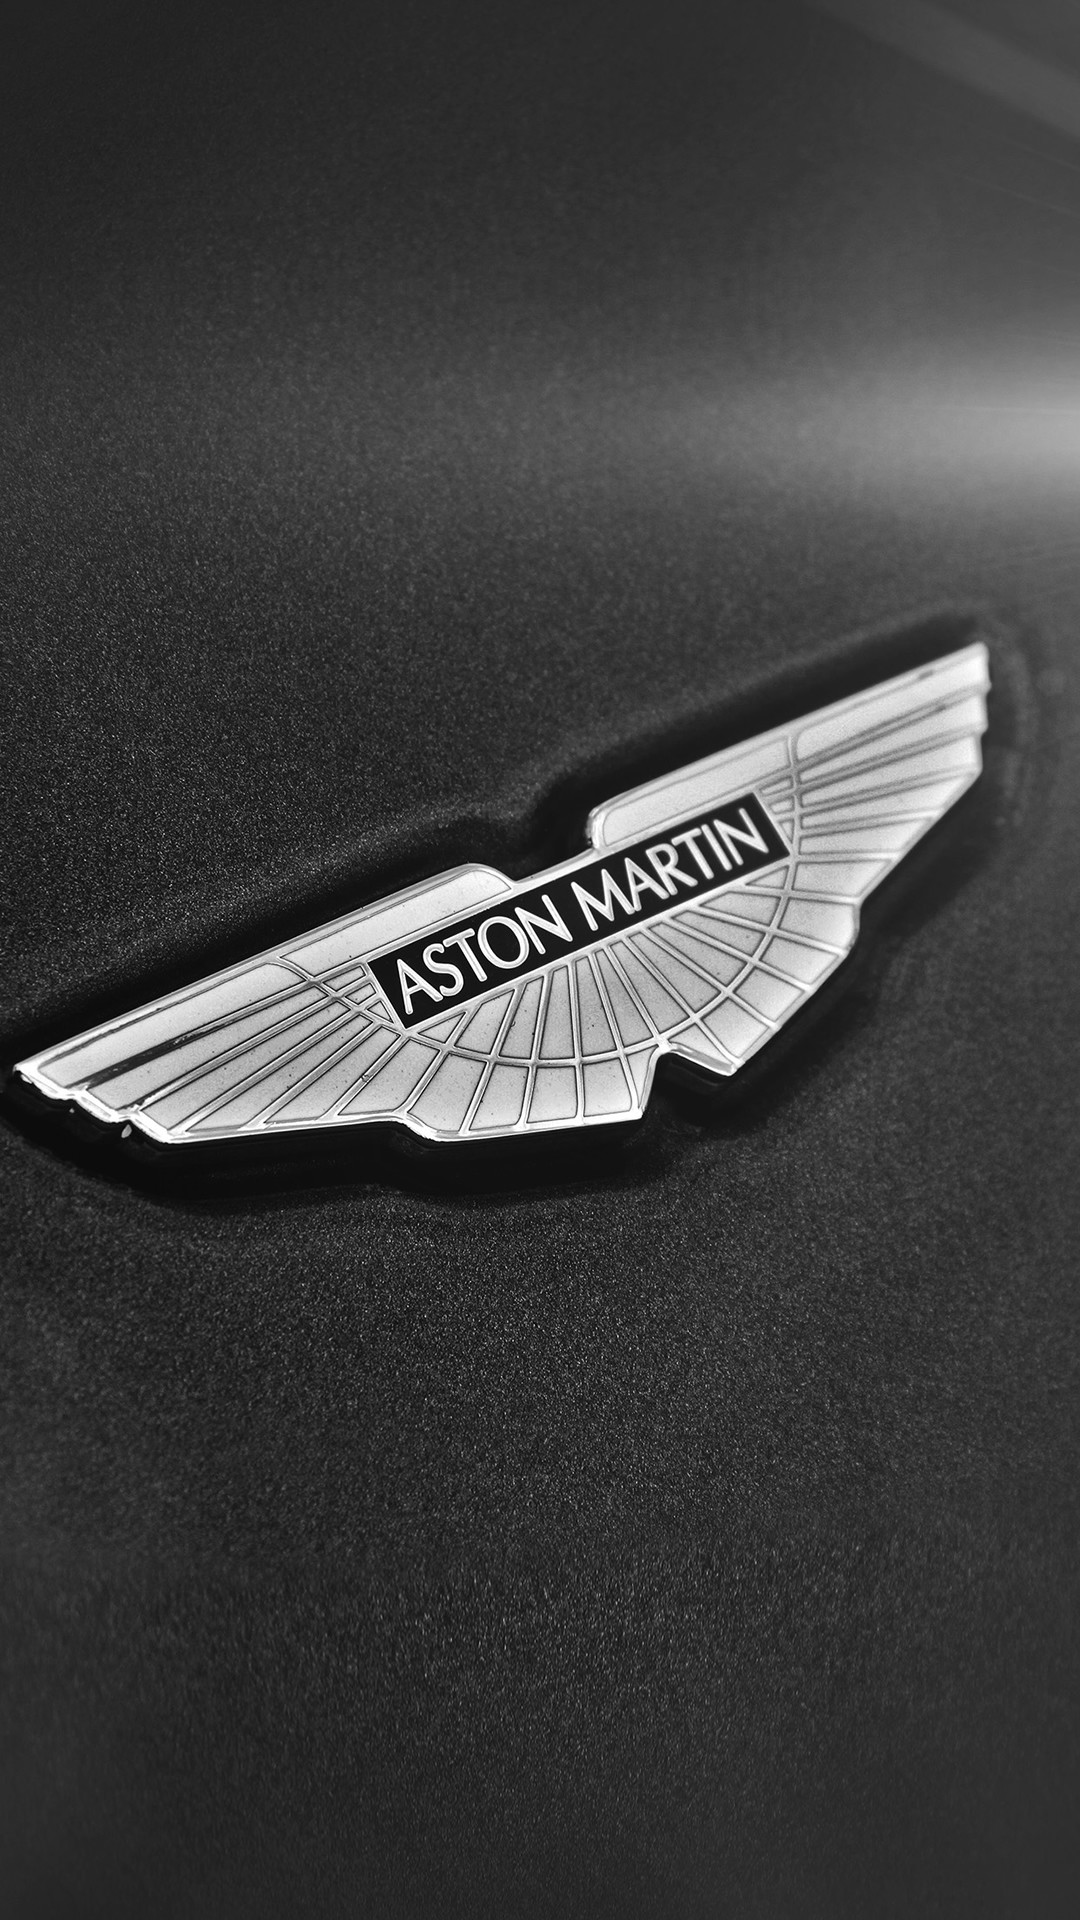 1080x1920 Simple Aston Martin Logo Dark Background iPhone 6 wallpaper